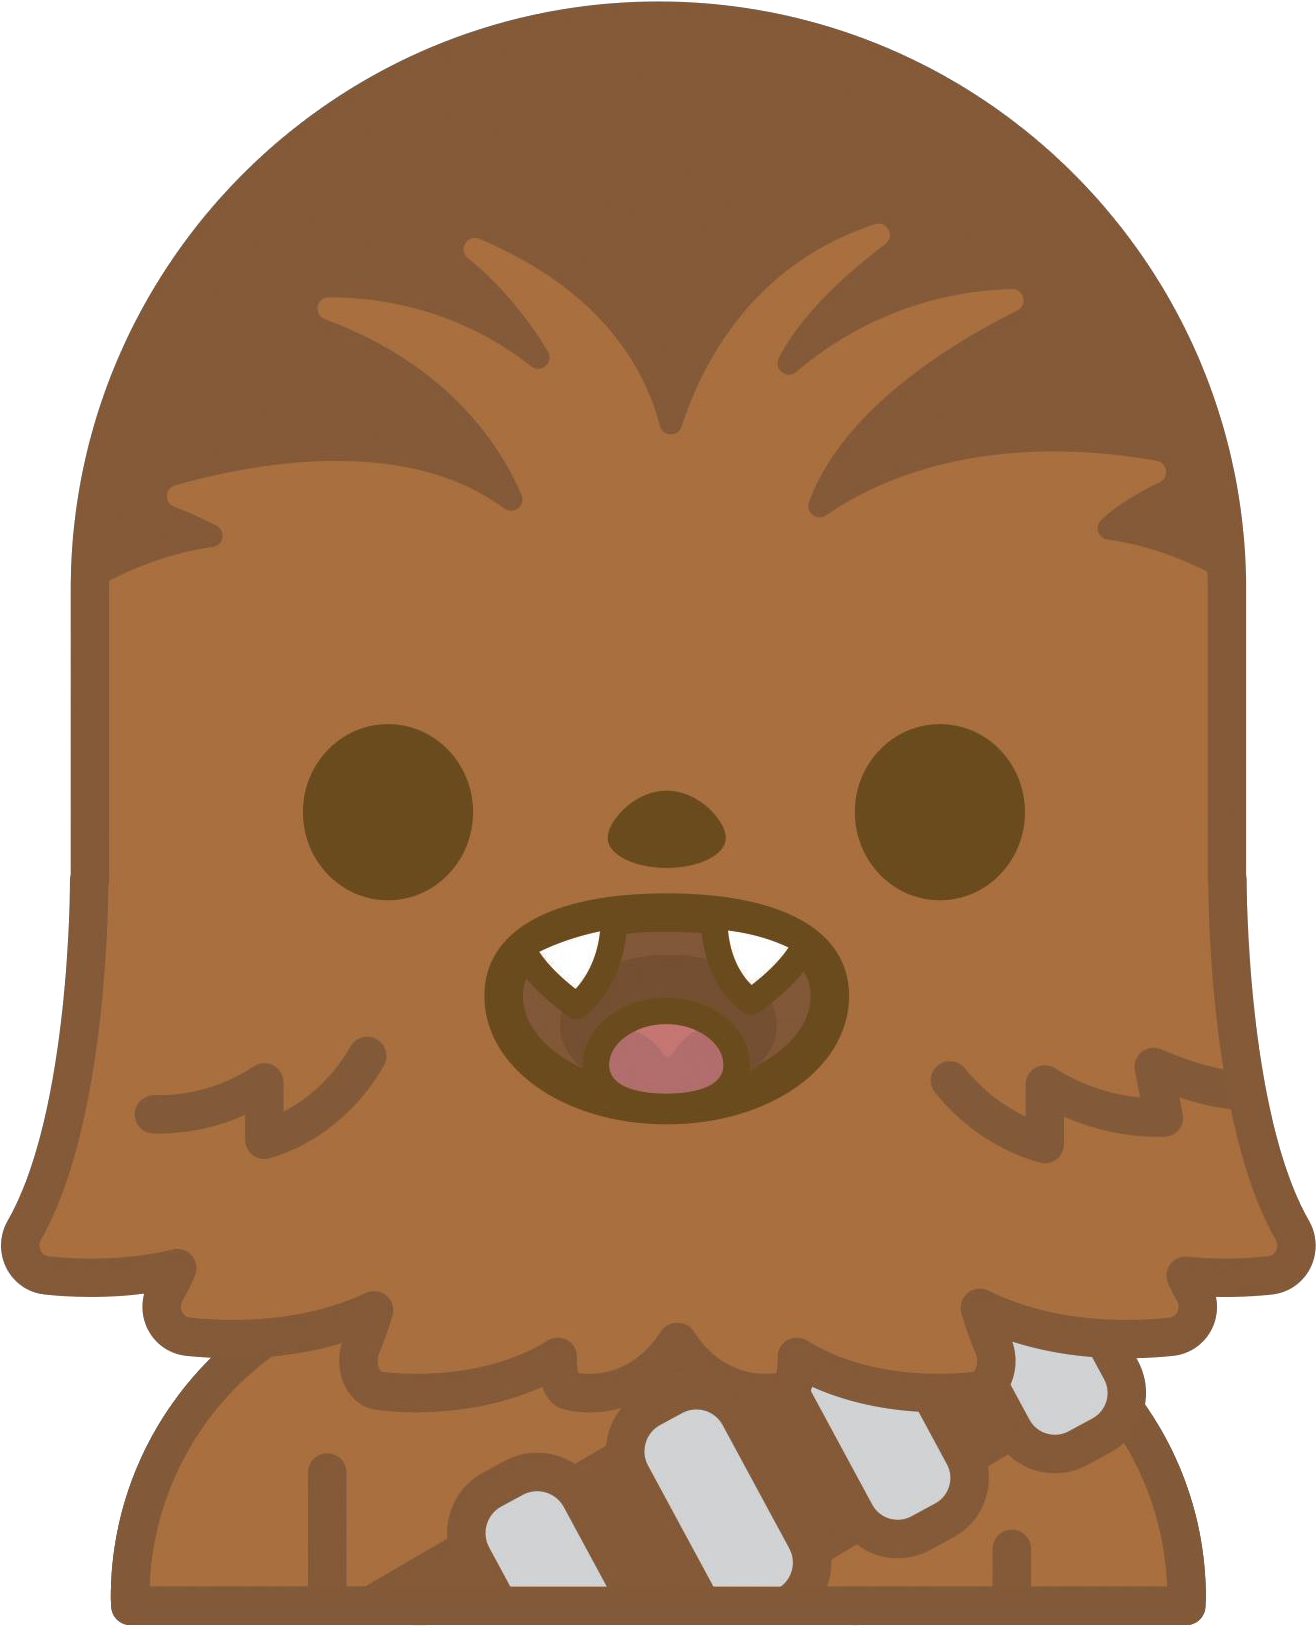 Star Wars Chewbacca Emoji (1800x1800)